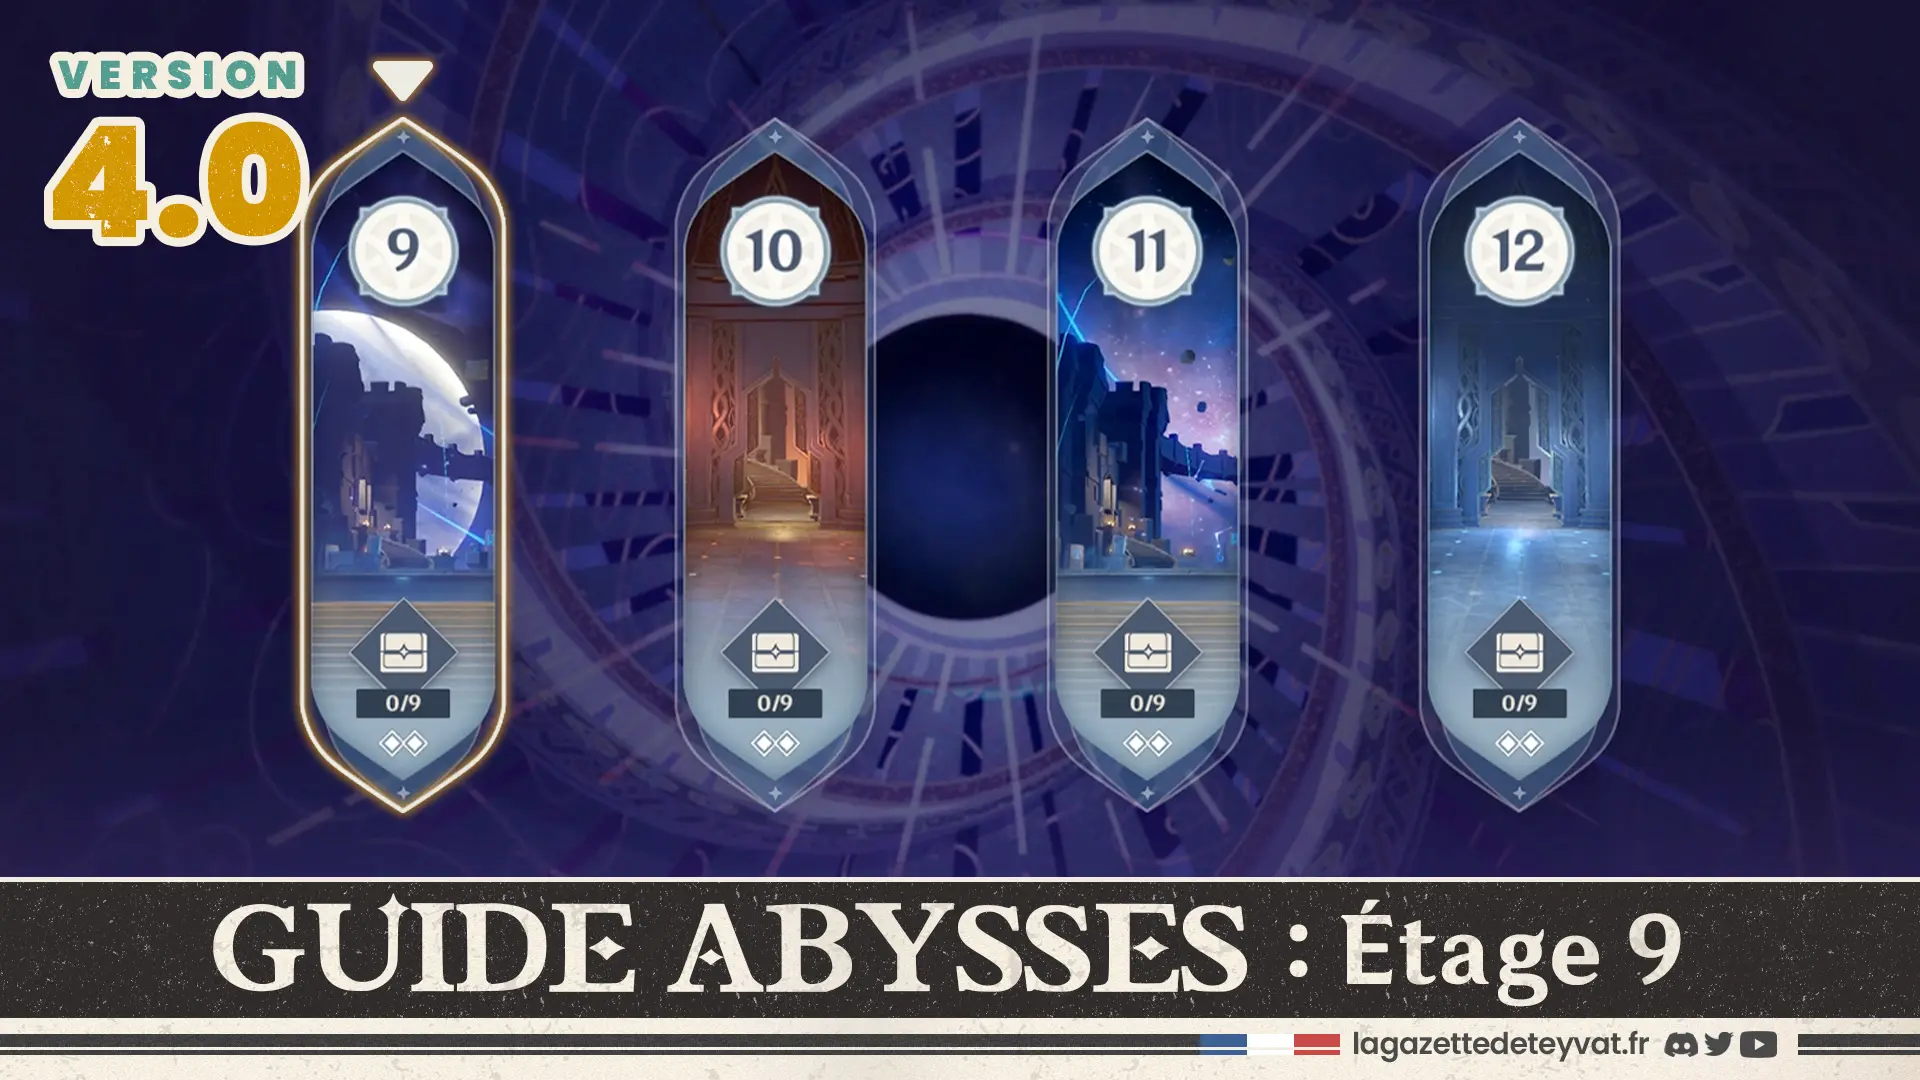 Abysses 4.0 étage 9